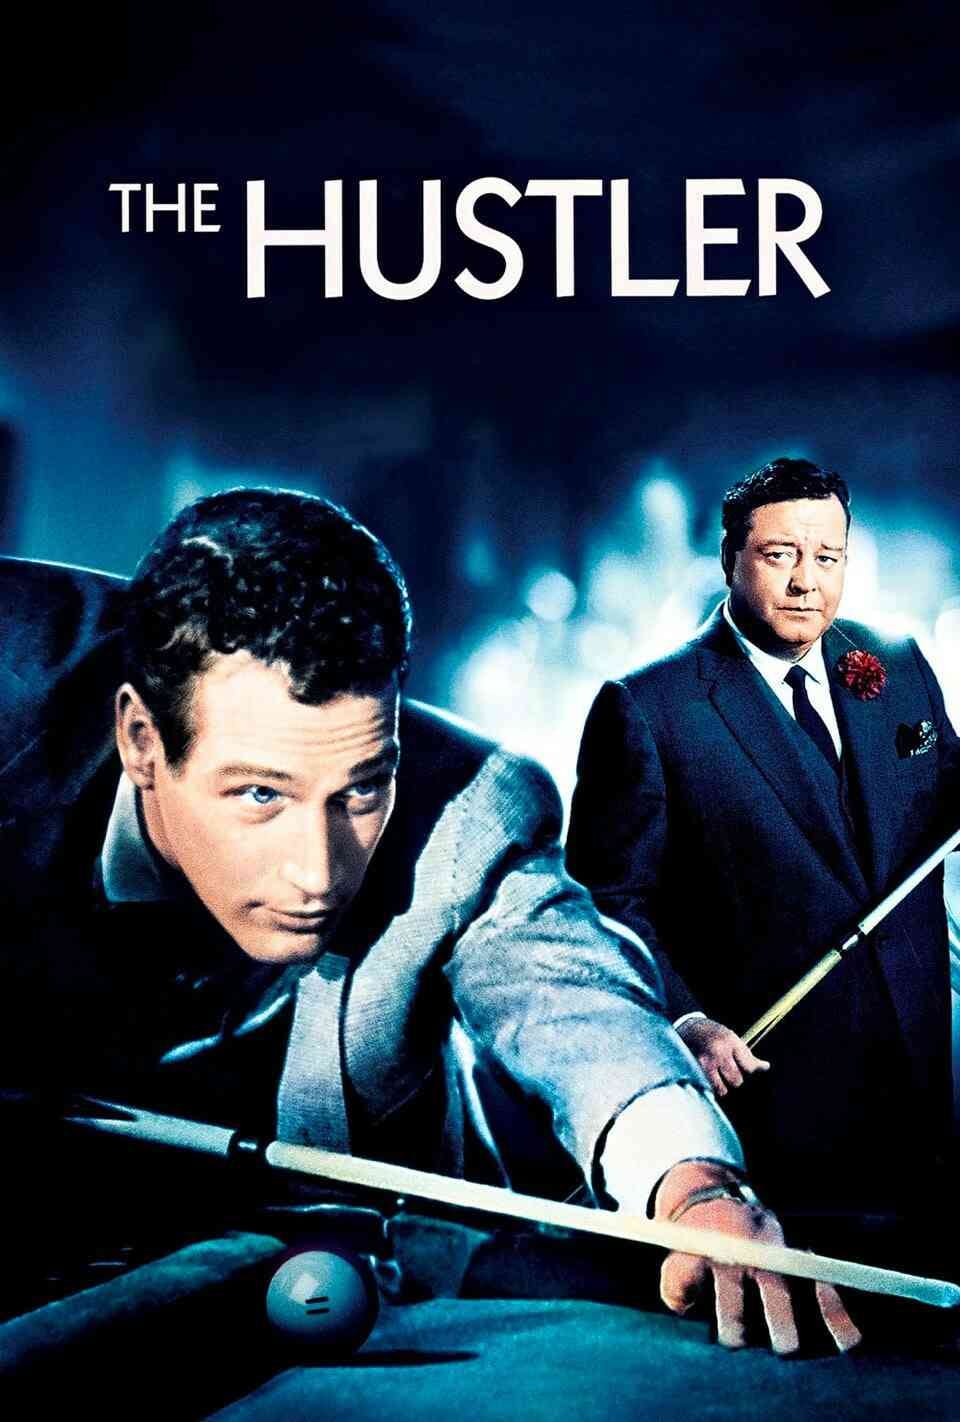 Read The Hustler screenplay (poster)